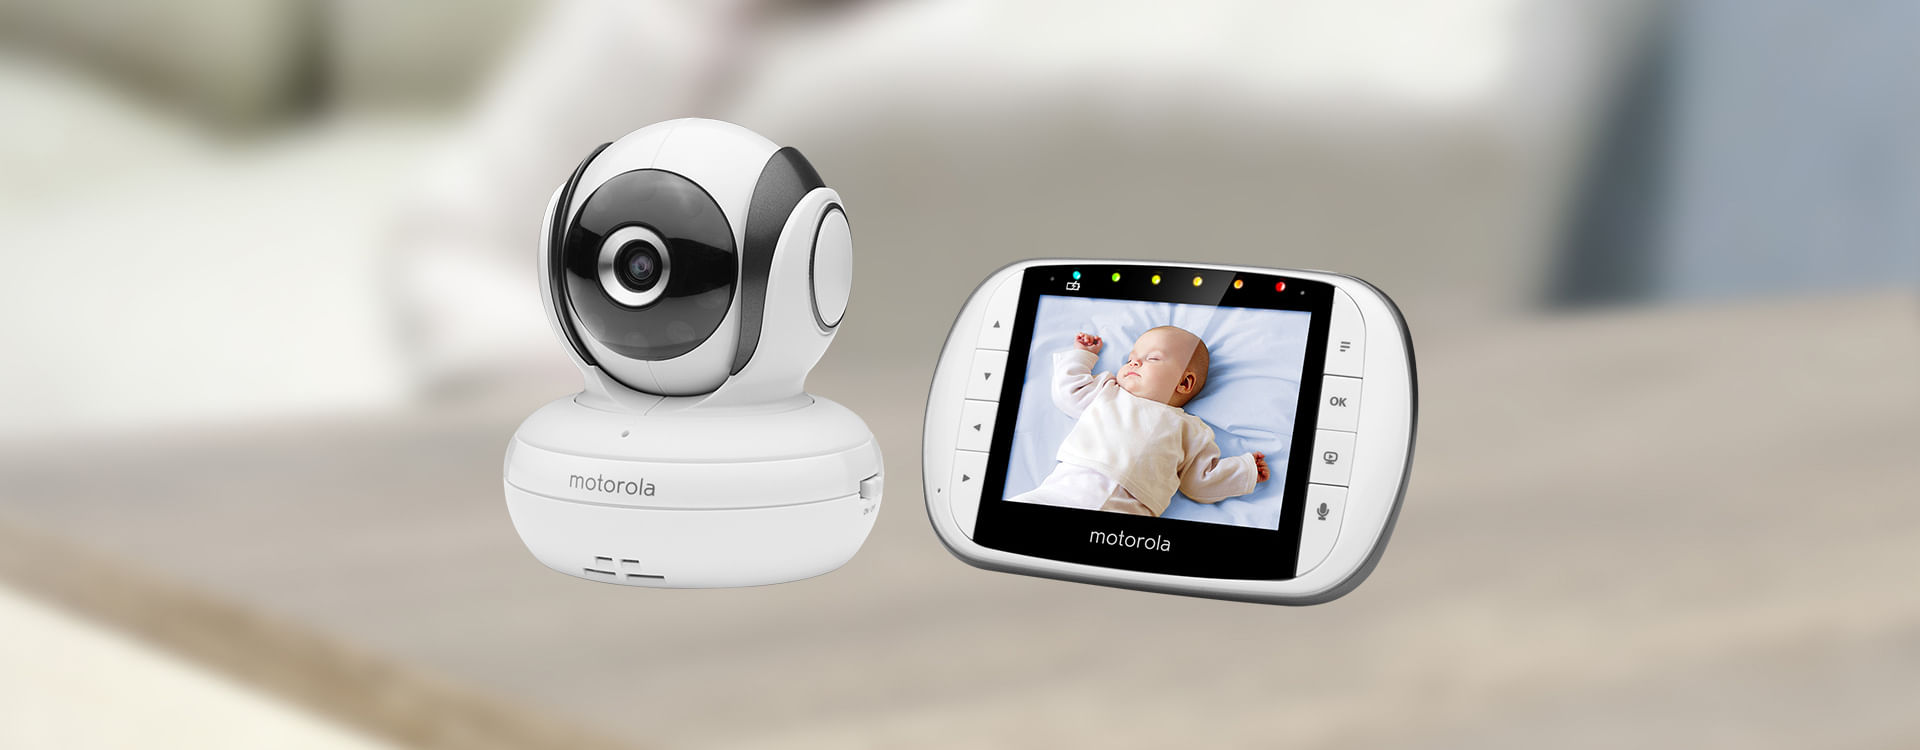 motorola digital video baby monitor mbp36s